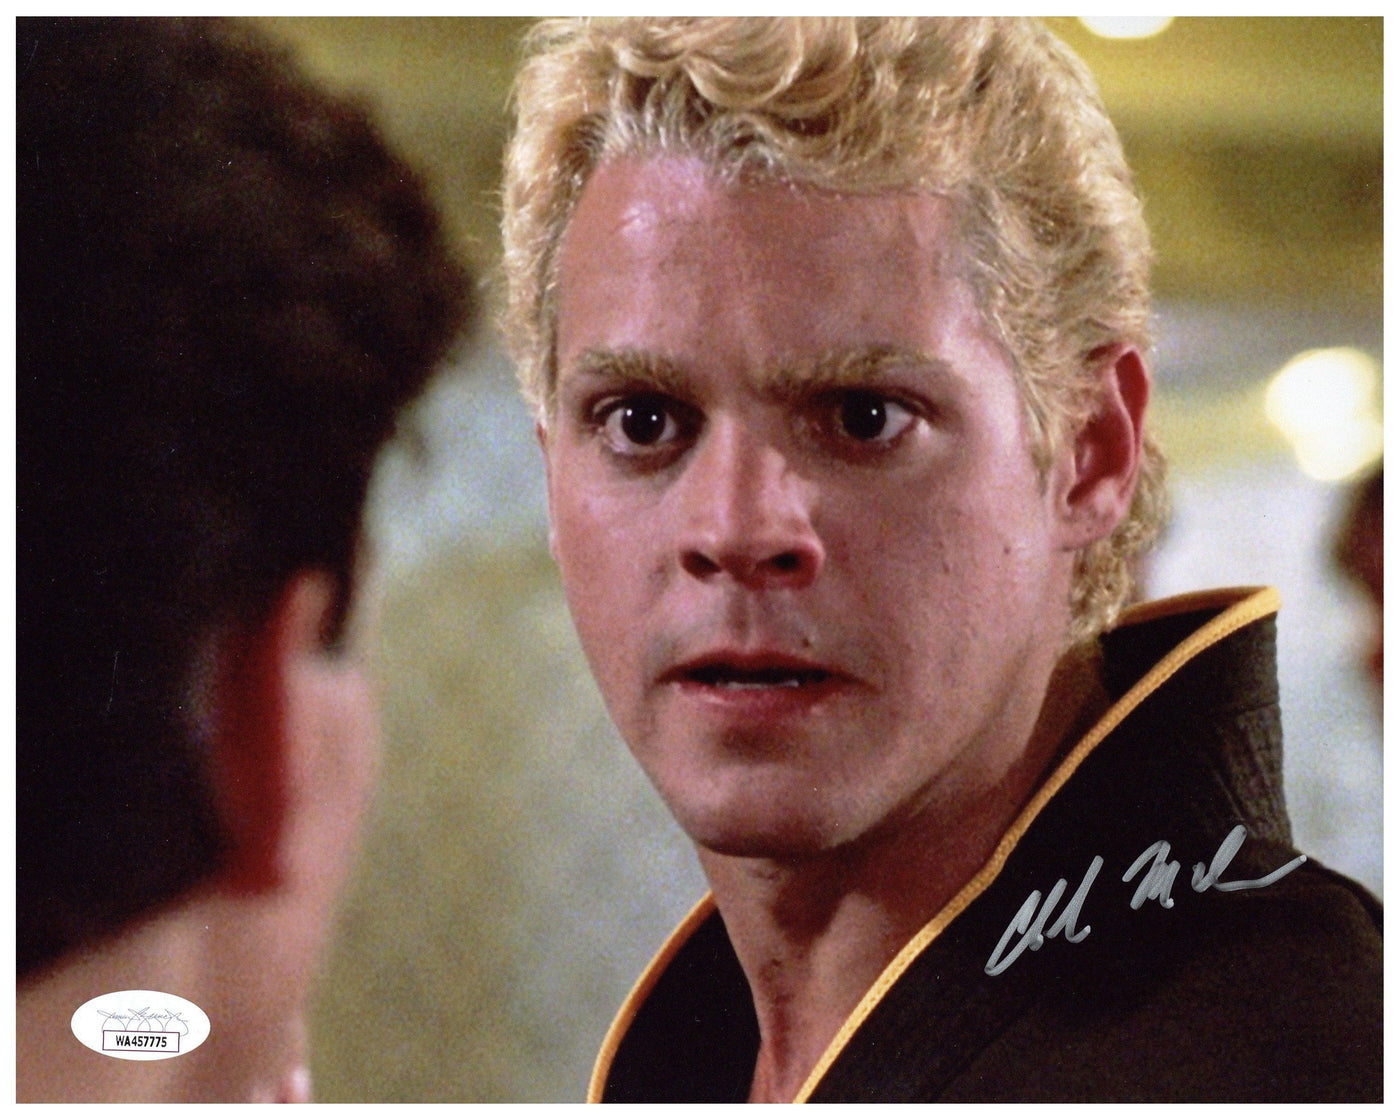 Chad McQueen Signed 8x10 Photo - The Karate Kid - Cobra Kai Autographed JSA COA